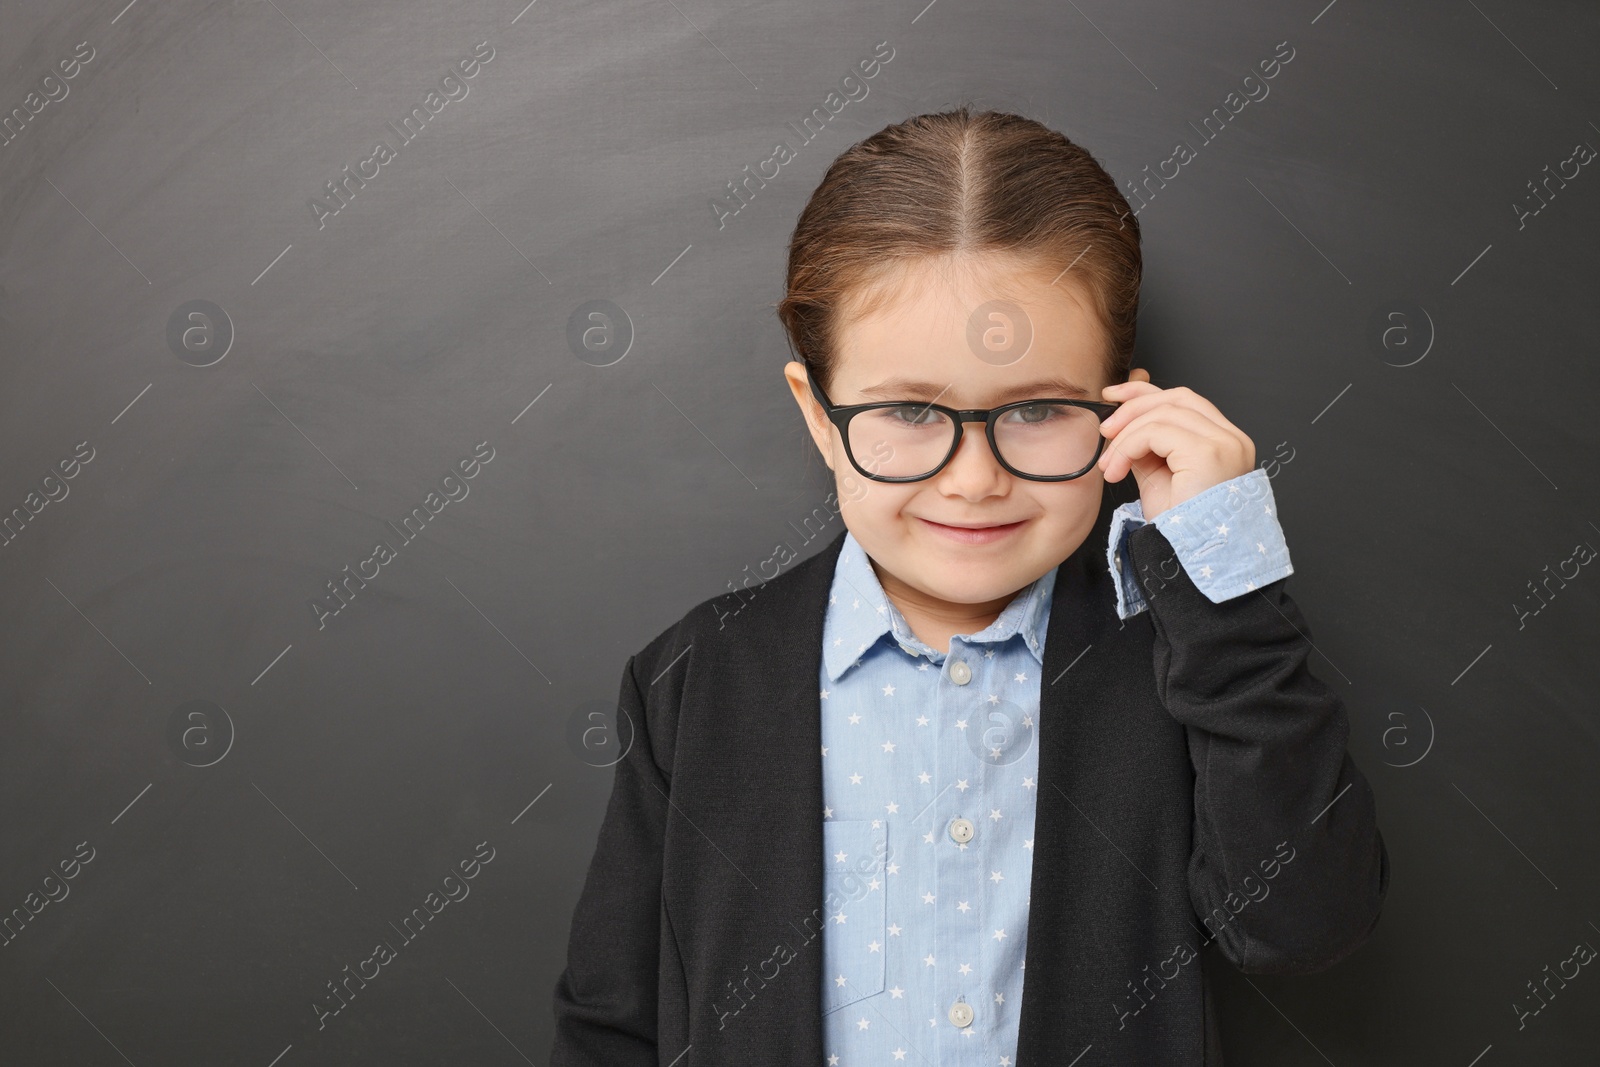 Photo of Happy little school child in uniform near chalkboard. Space for text